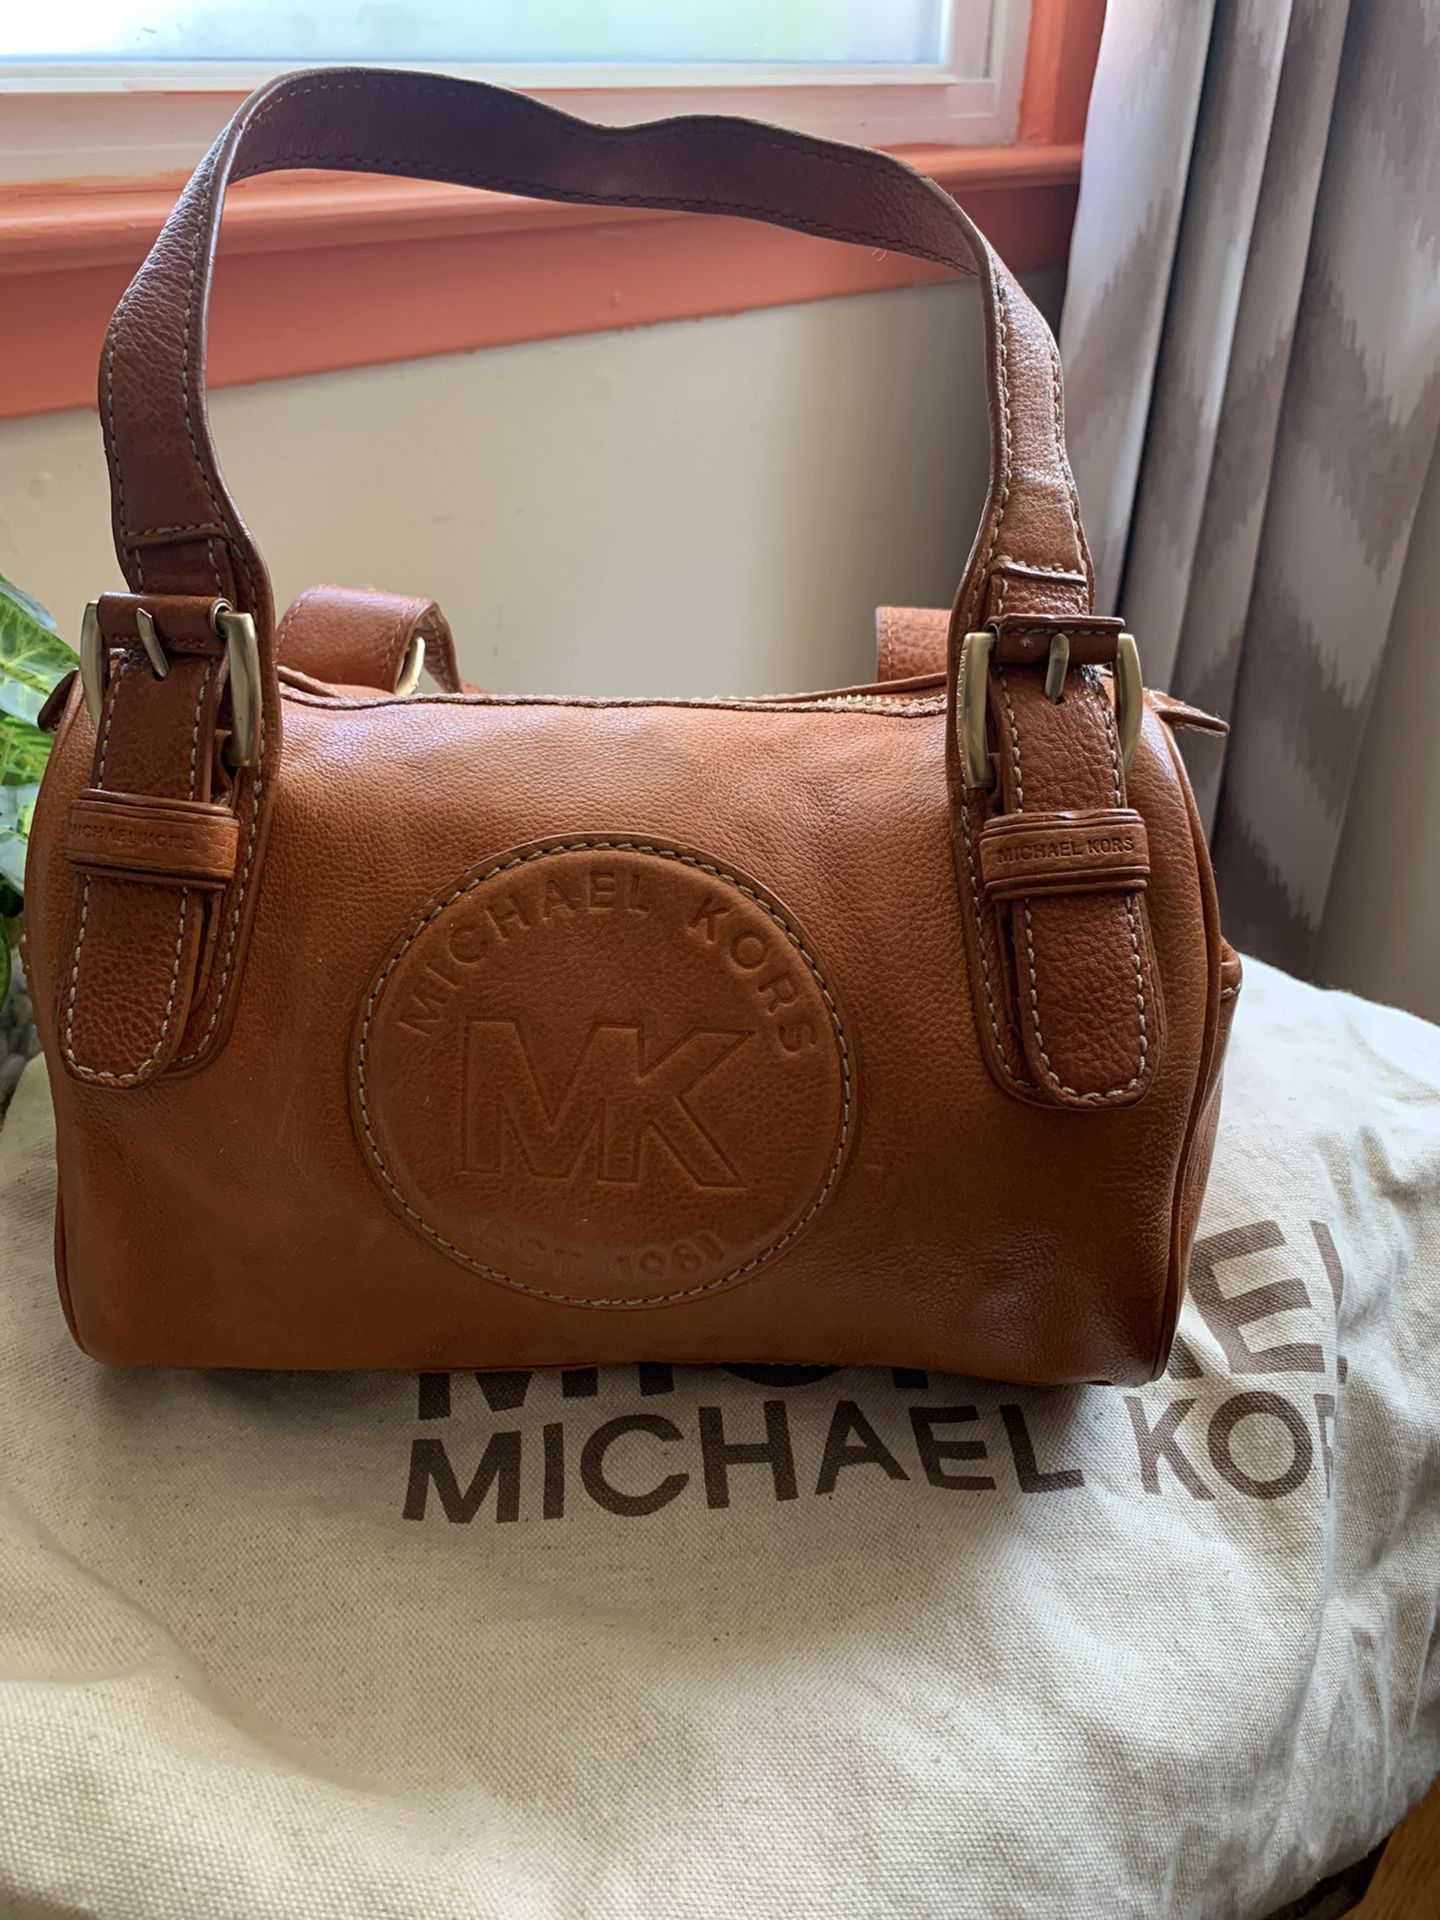 Michael Kors Orange Handbag for Sale in Westland, MI - OfferUp